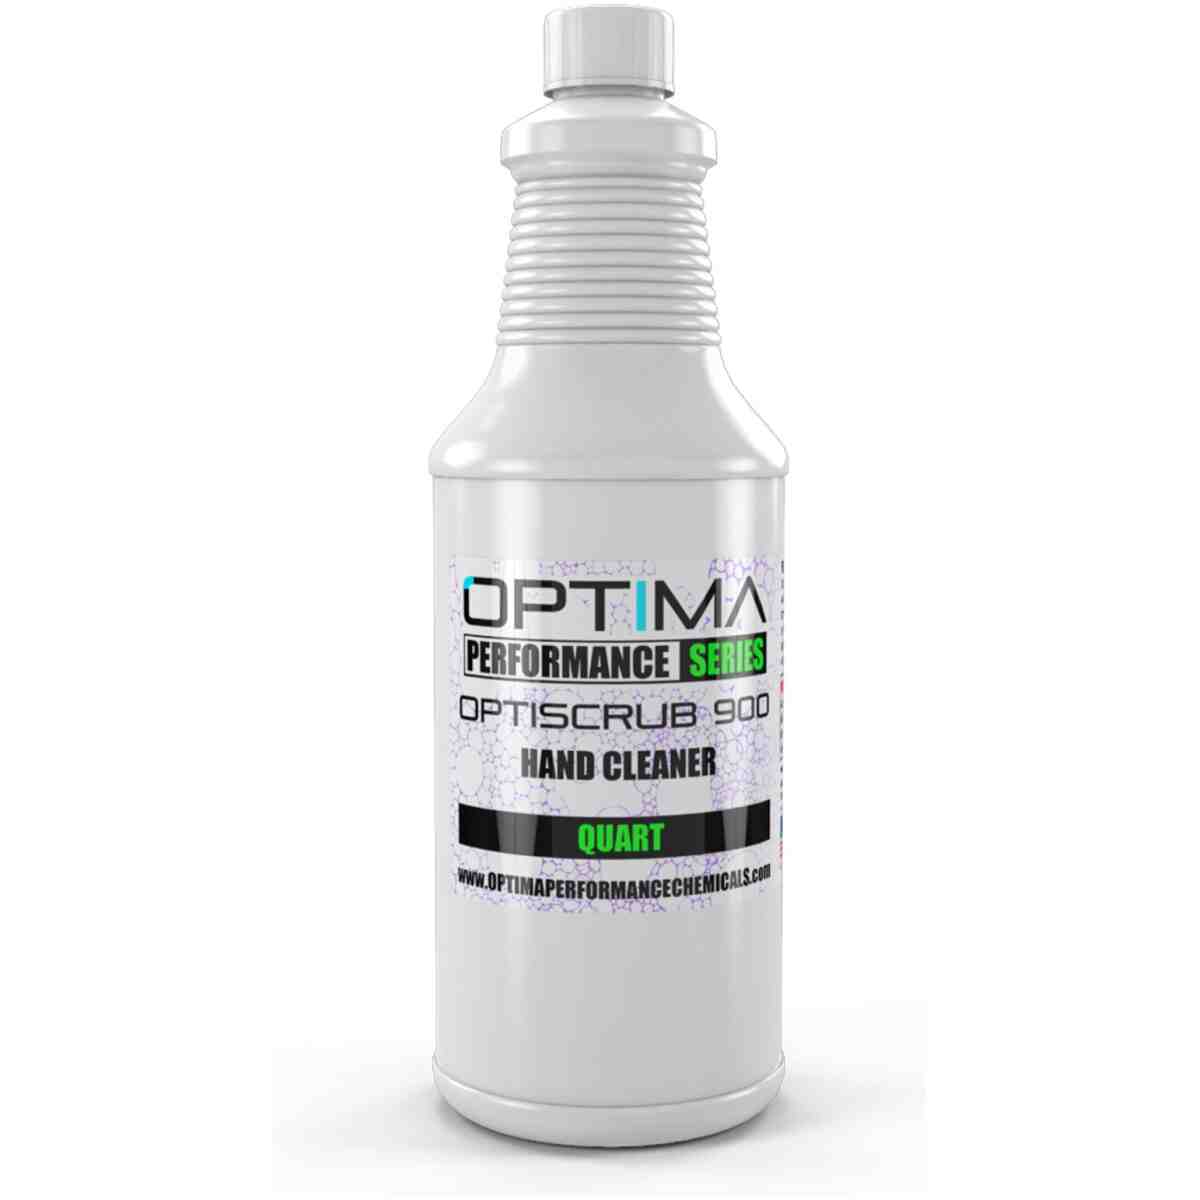 Opti-scrub 900 - Hand Cleaner OPTIMA PERFORMANCE SERIES®